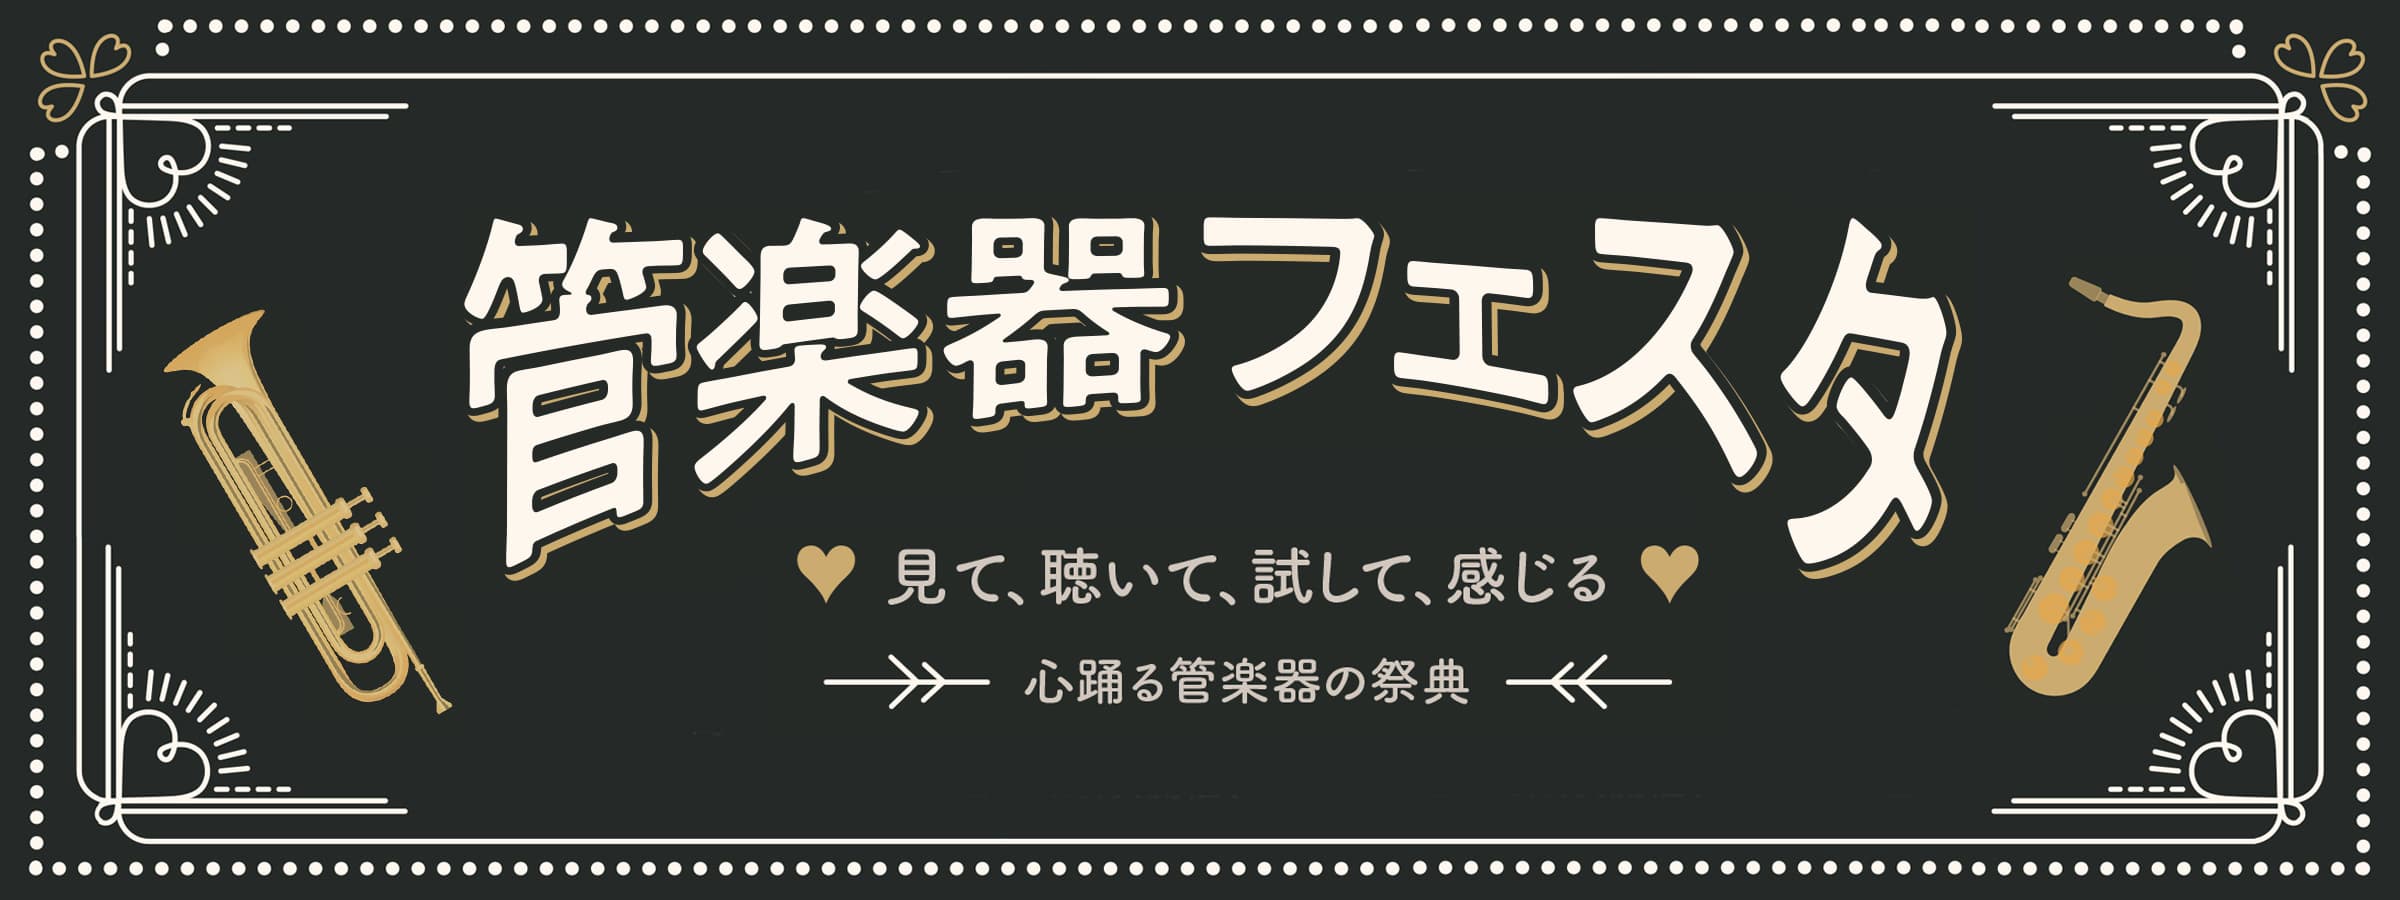 [http://www.shimamura.co.jp/nara/index.php?itemid=104449::title=管楽器総合案内もご覧ください] *管楽器の祭典「管楽器フェスタ」ららぽーと甲子園で開催します！！ 半期に一度の管楽器の祭典[!「管楽器フェスタ」!]。]]おかげさまで今回、 […]